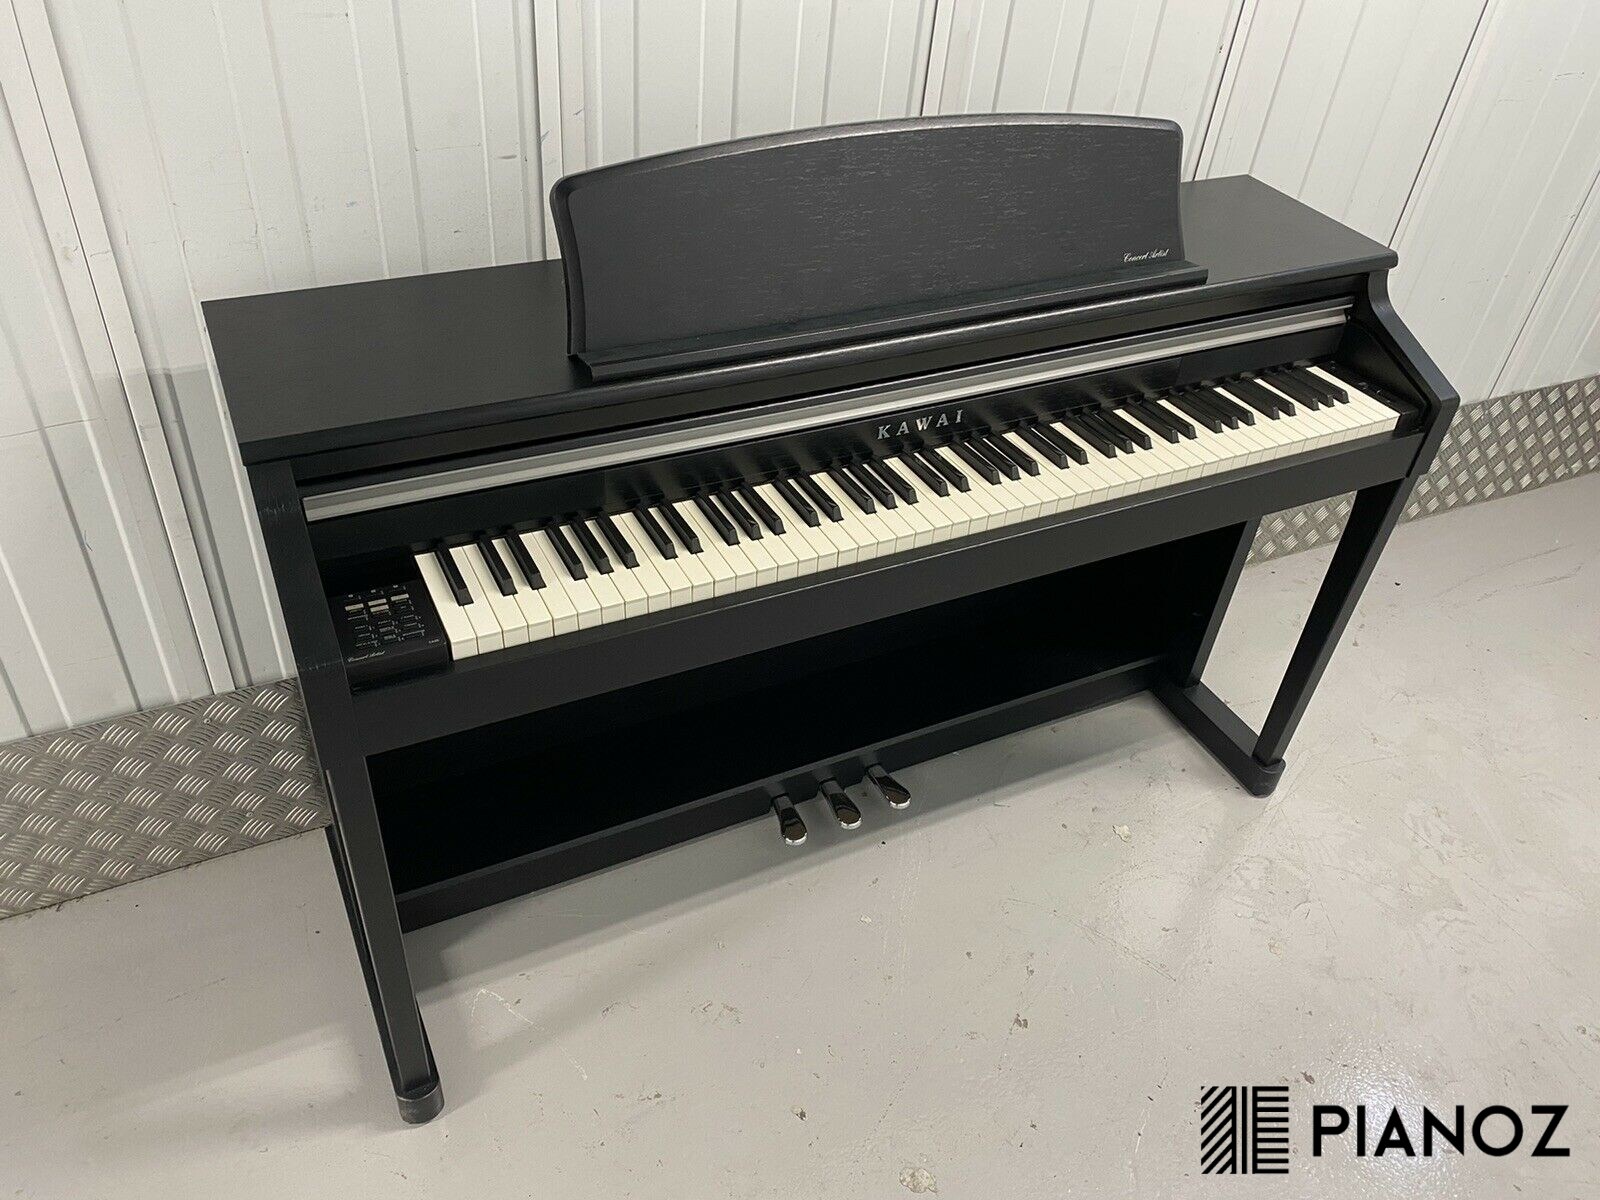 Kawai CA65 Digital Piano piano for sale in UK